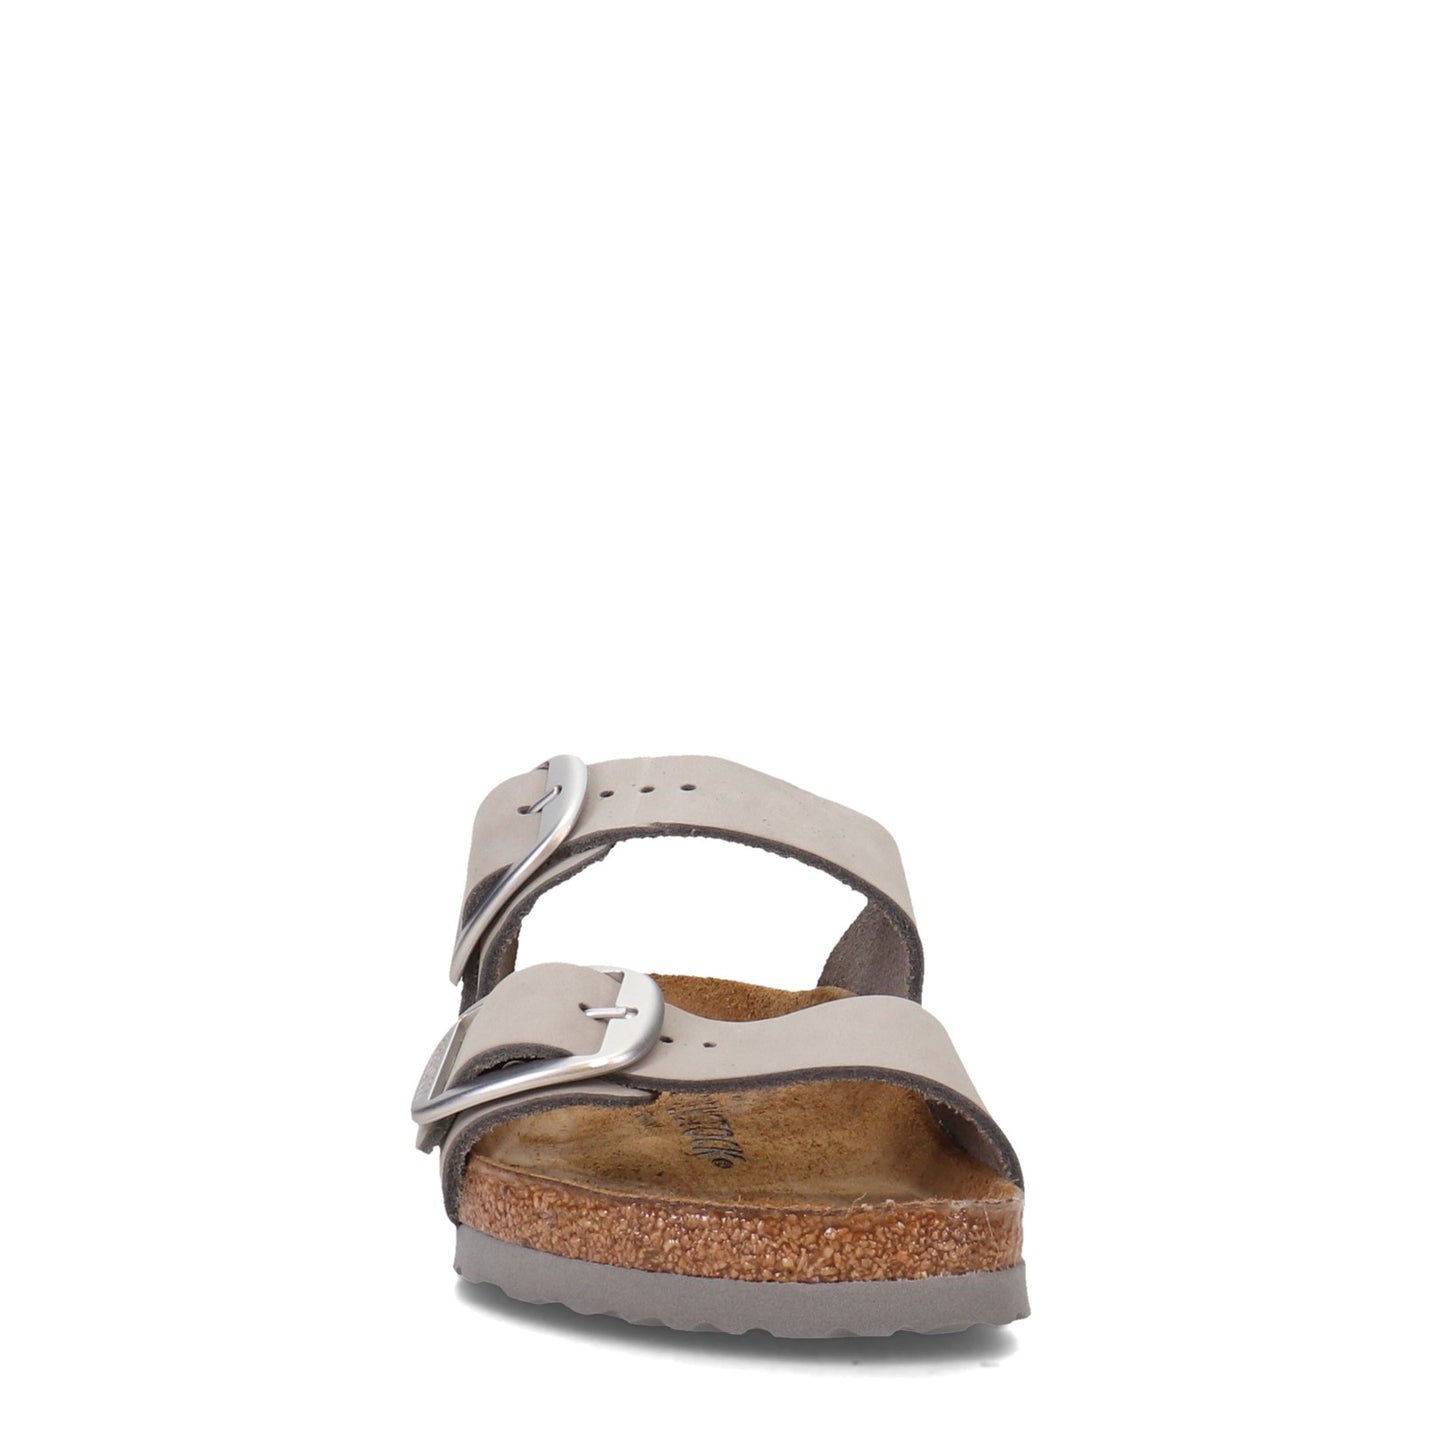 Peltz Shoes  Women's Birkenstock Arizona Big Buckle Sandal GREY NUBUCK 1021 751 R